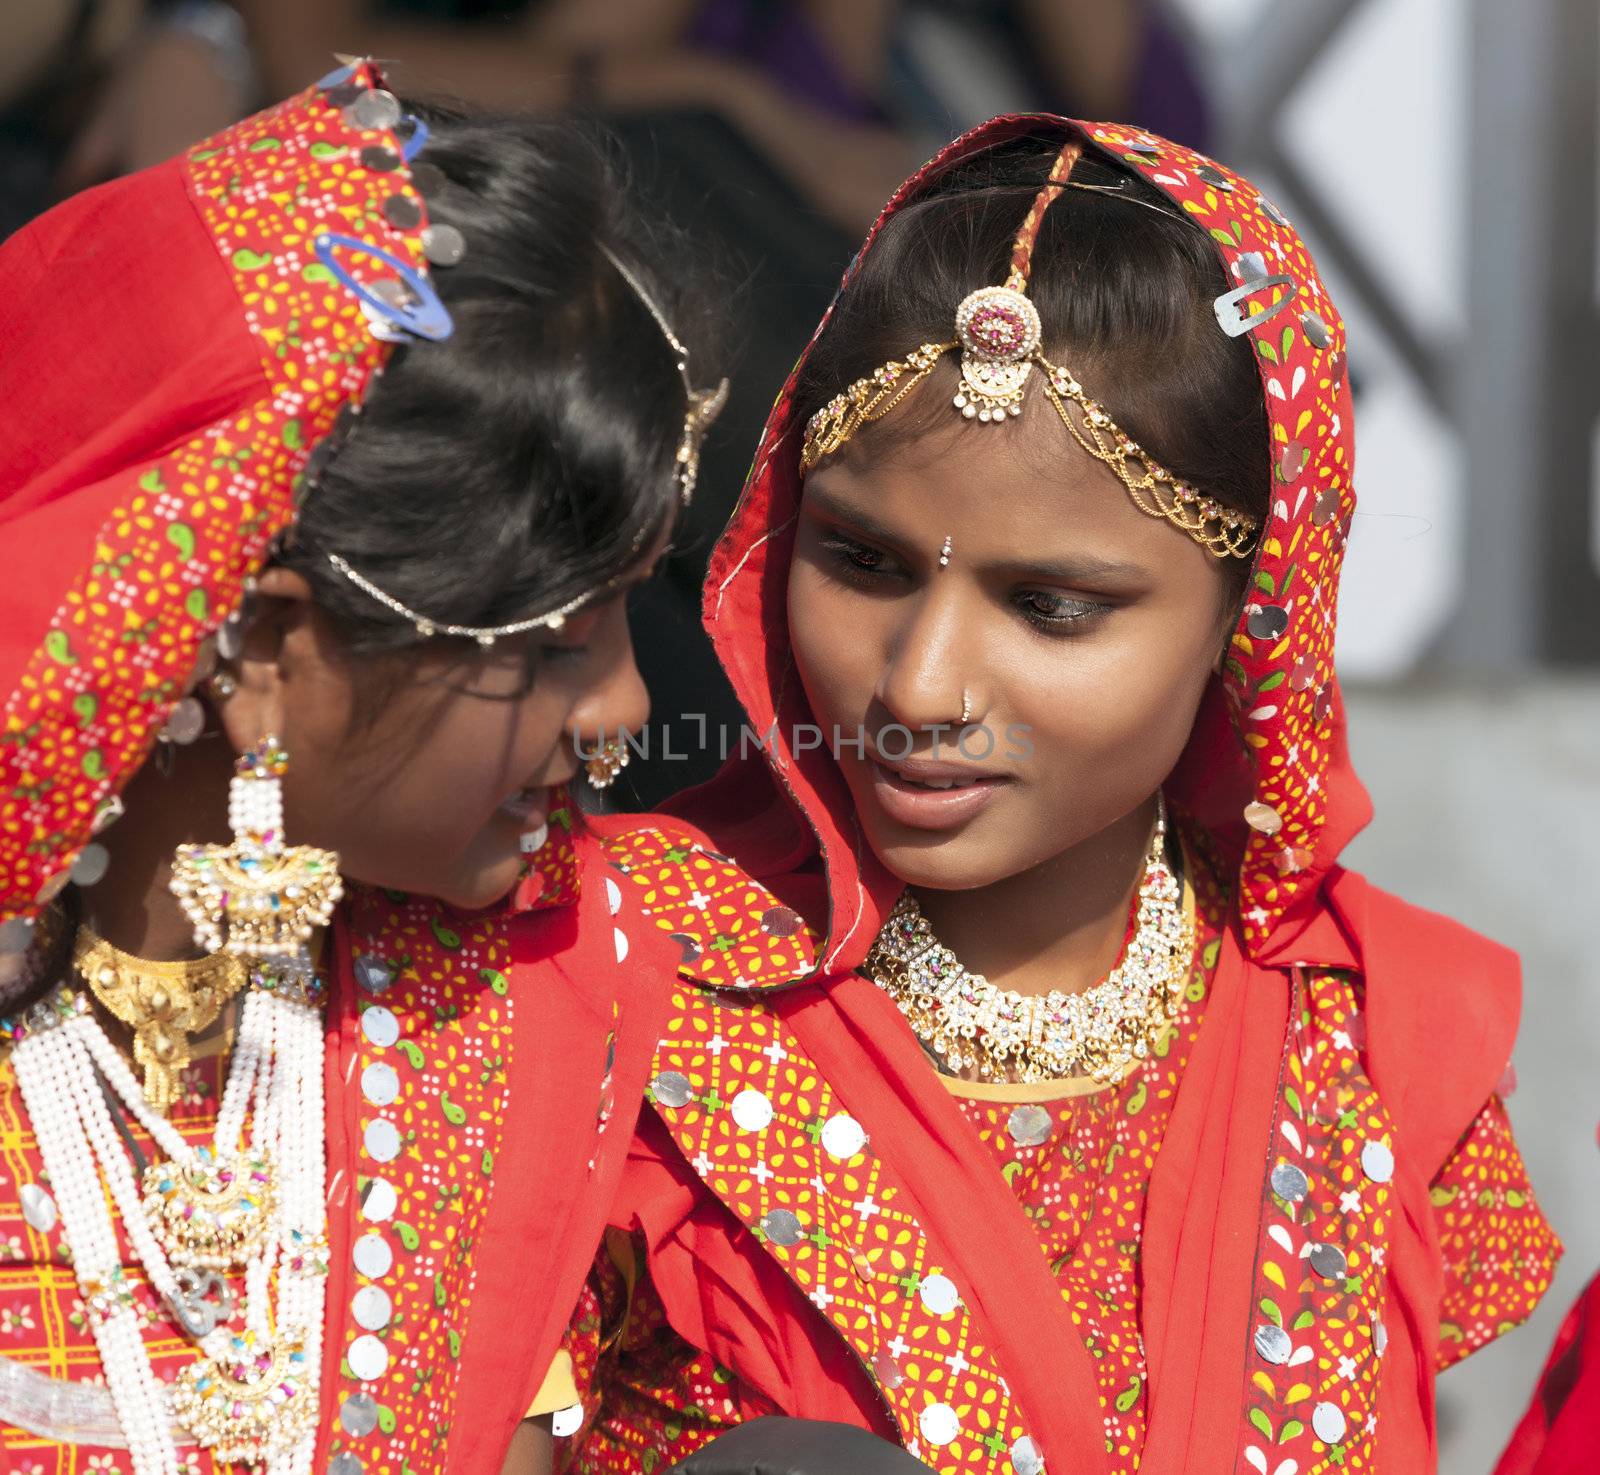 Indian girls in colorful ethnic attire by vladimir_sklyarov